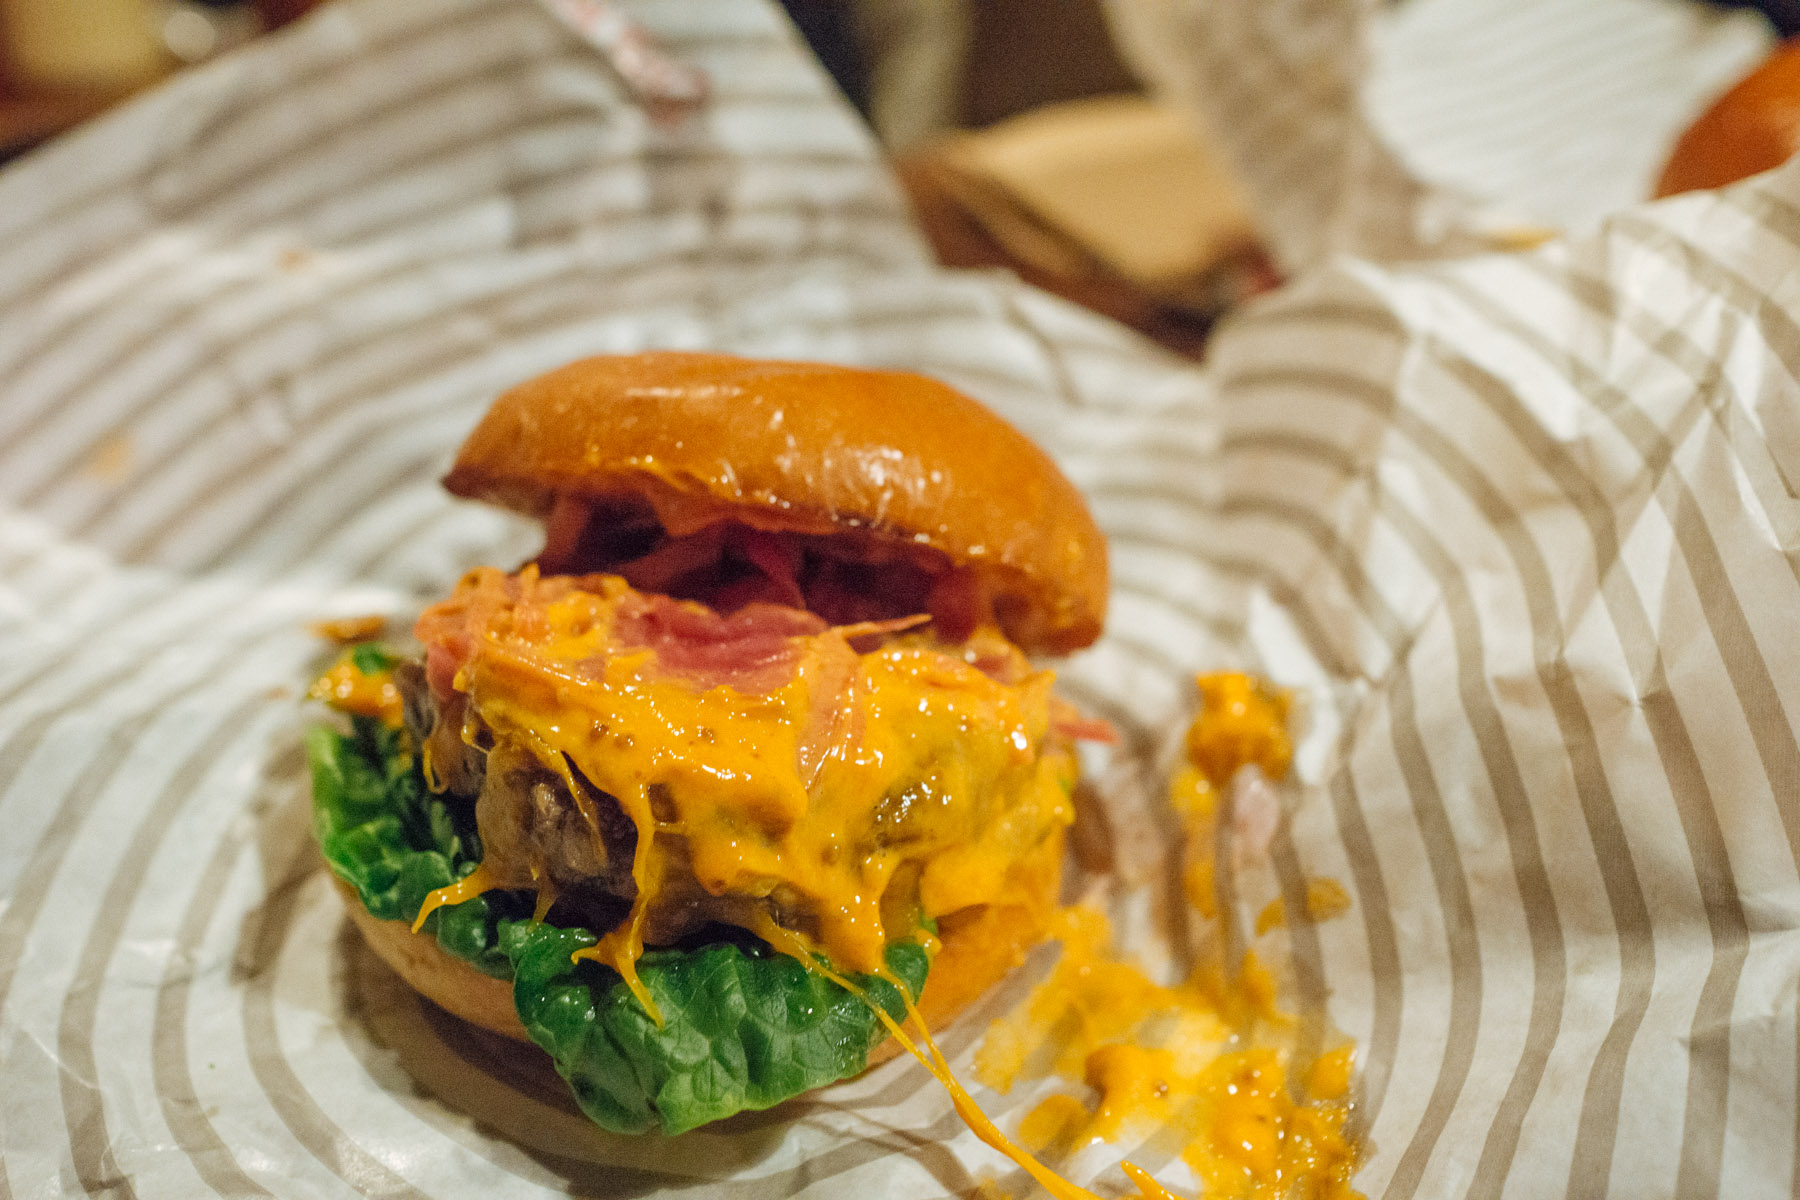 Patty & Bun Review: "Best Burger" Restaurant in London, England | That